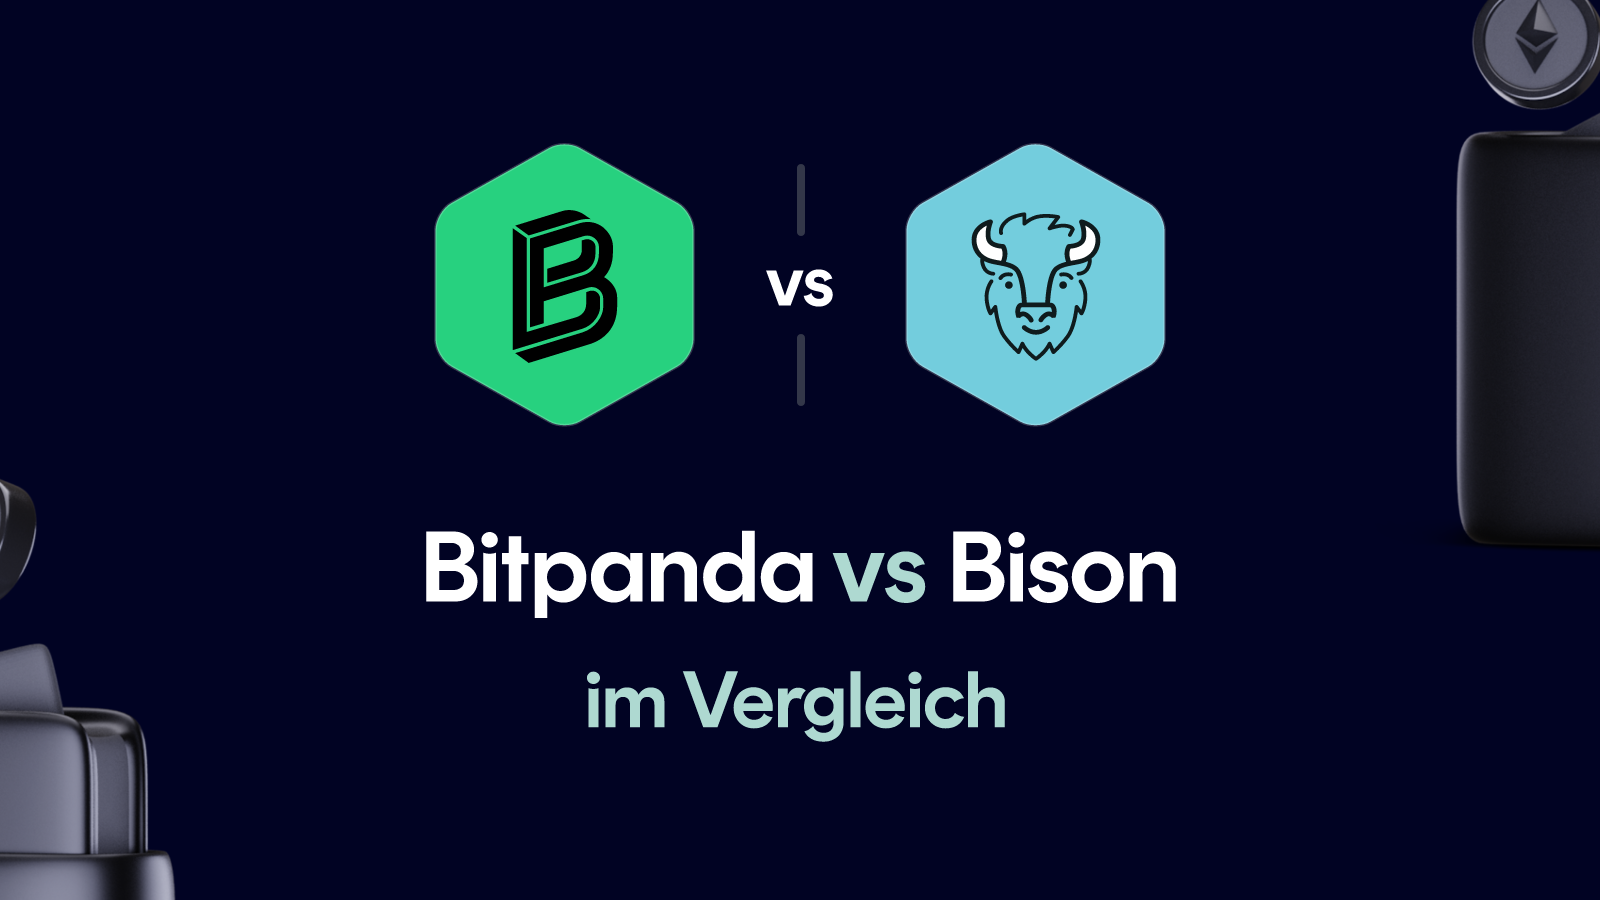 Bitpanda vs Bison im Vergleich